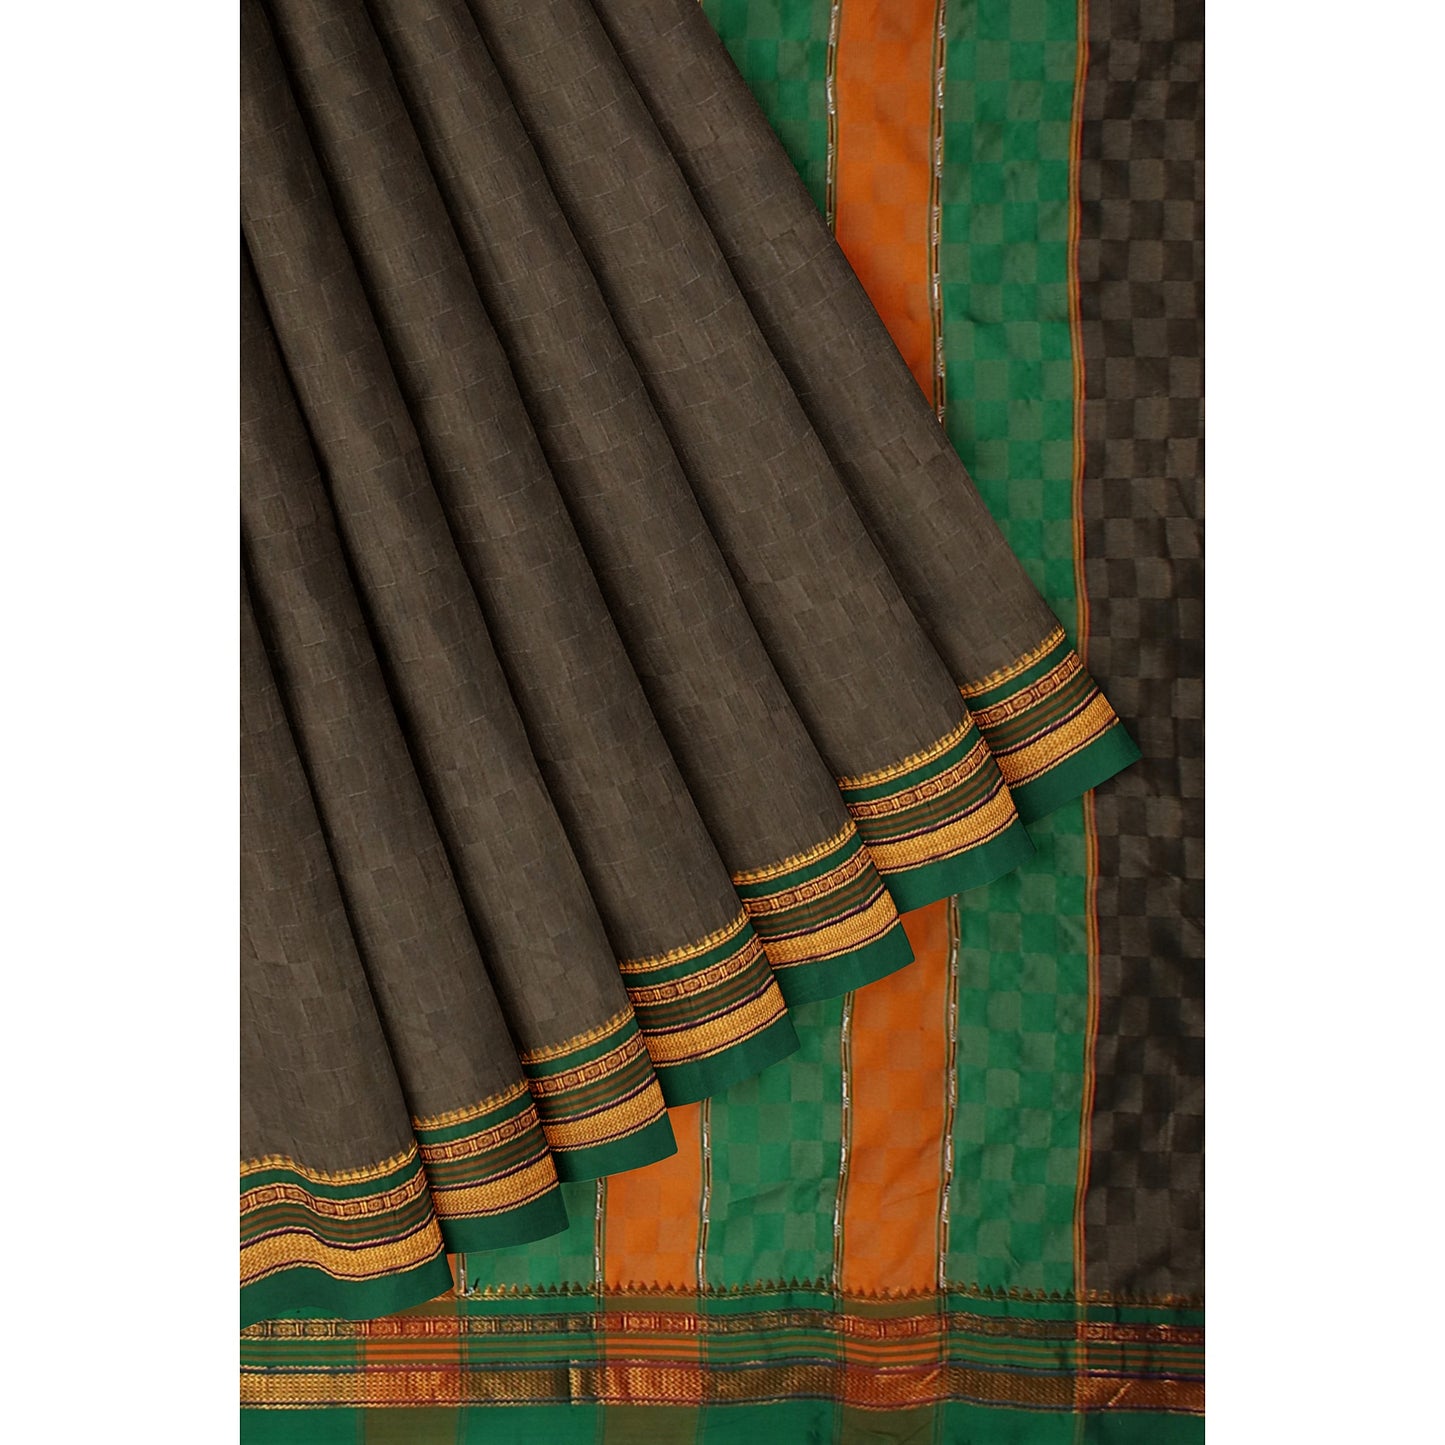 Ambuja Soft Mercerized Cotton saree - Dark Grey with Green border